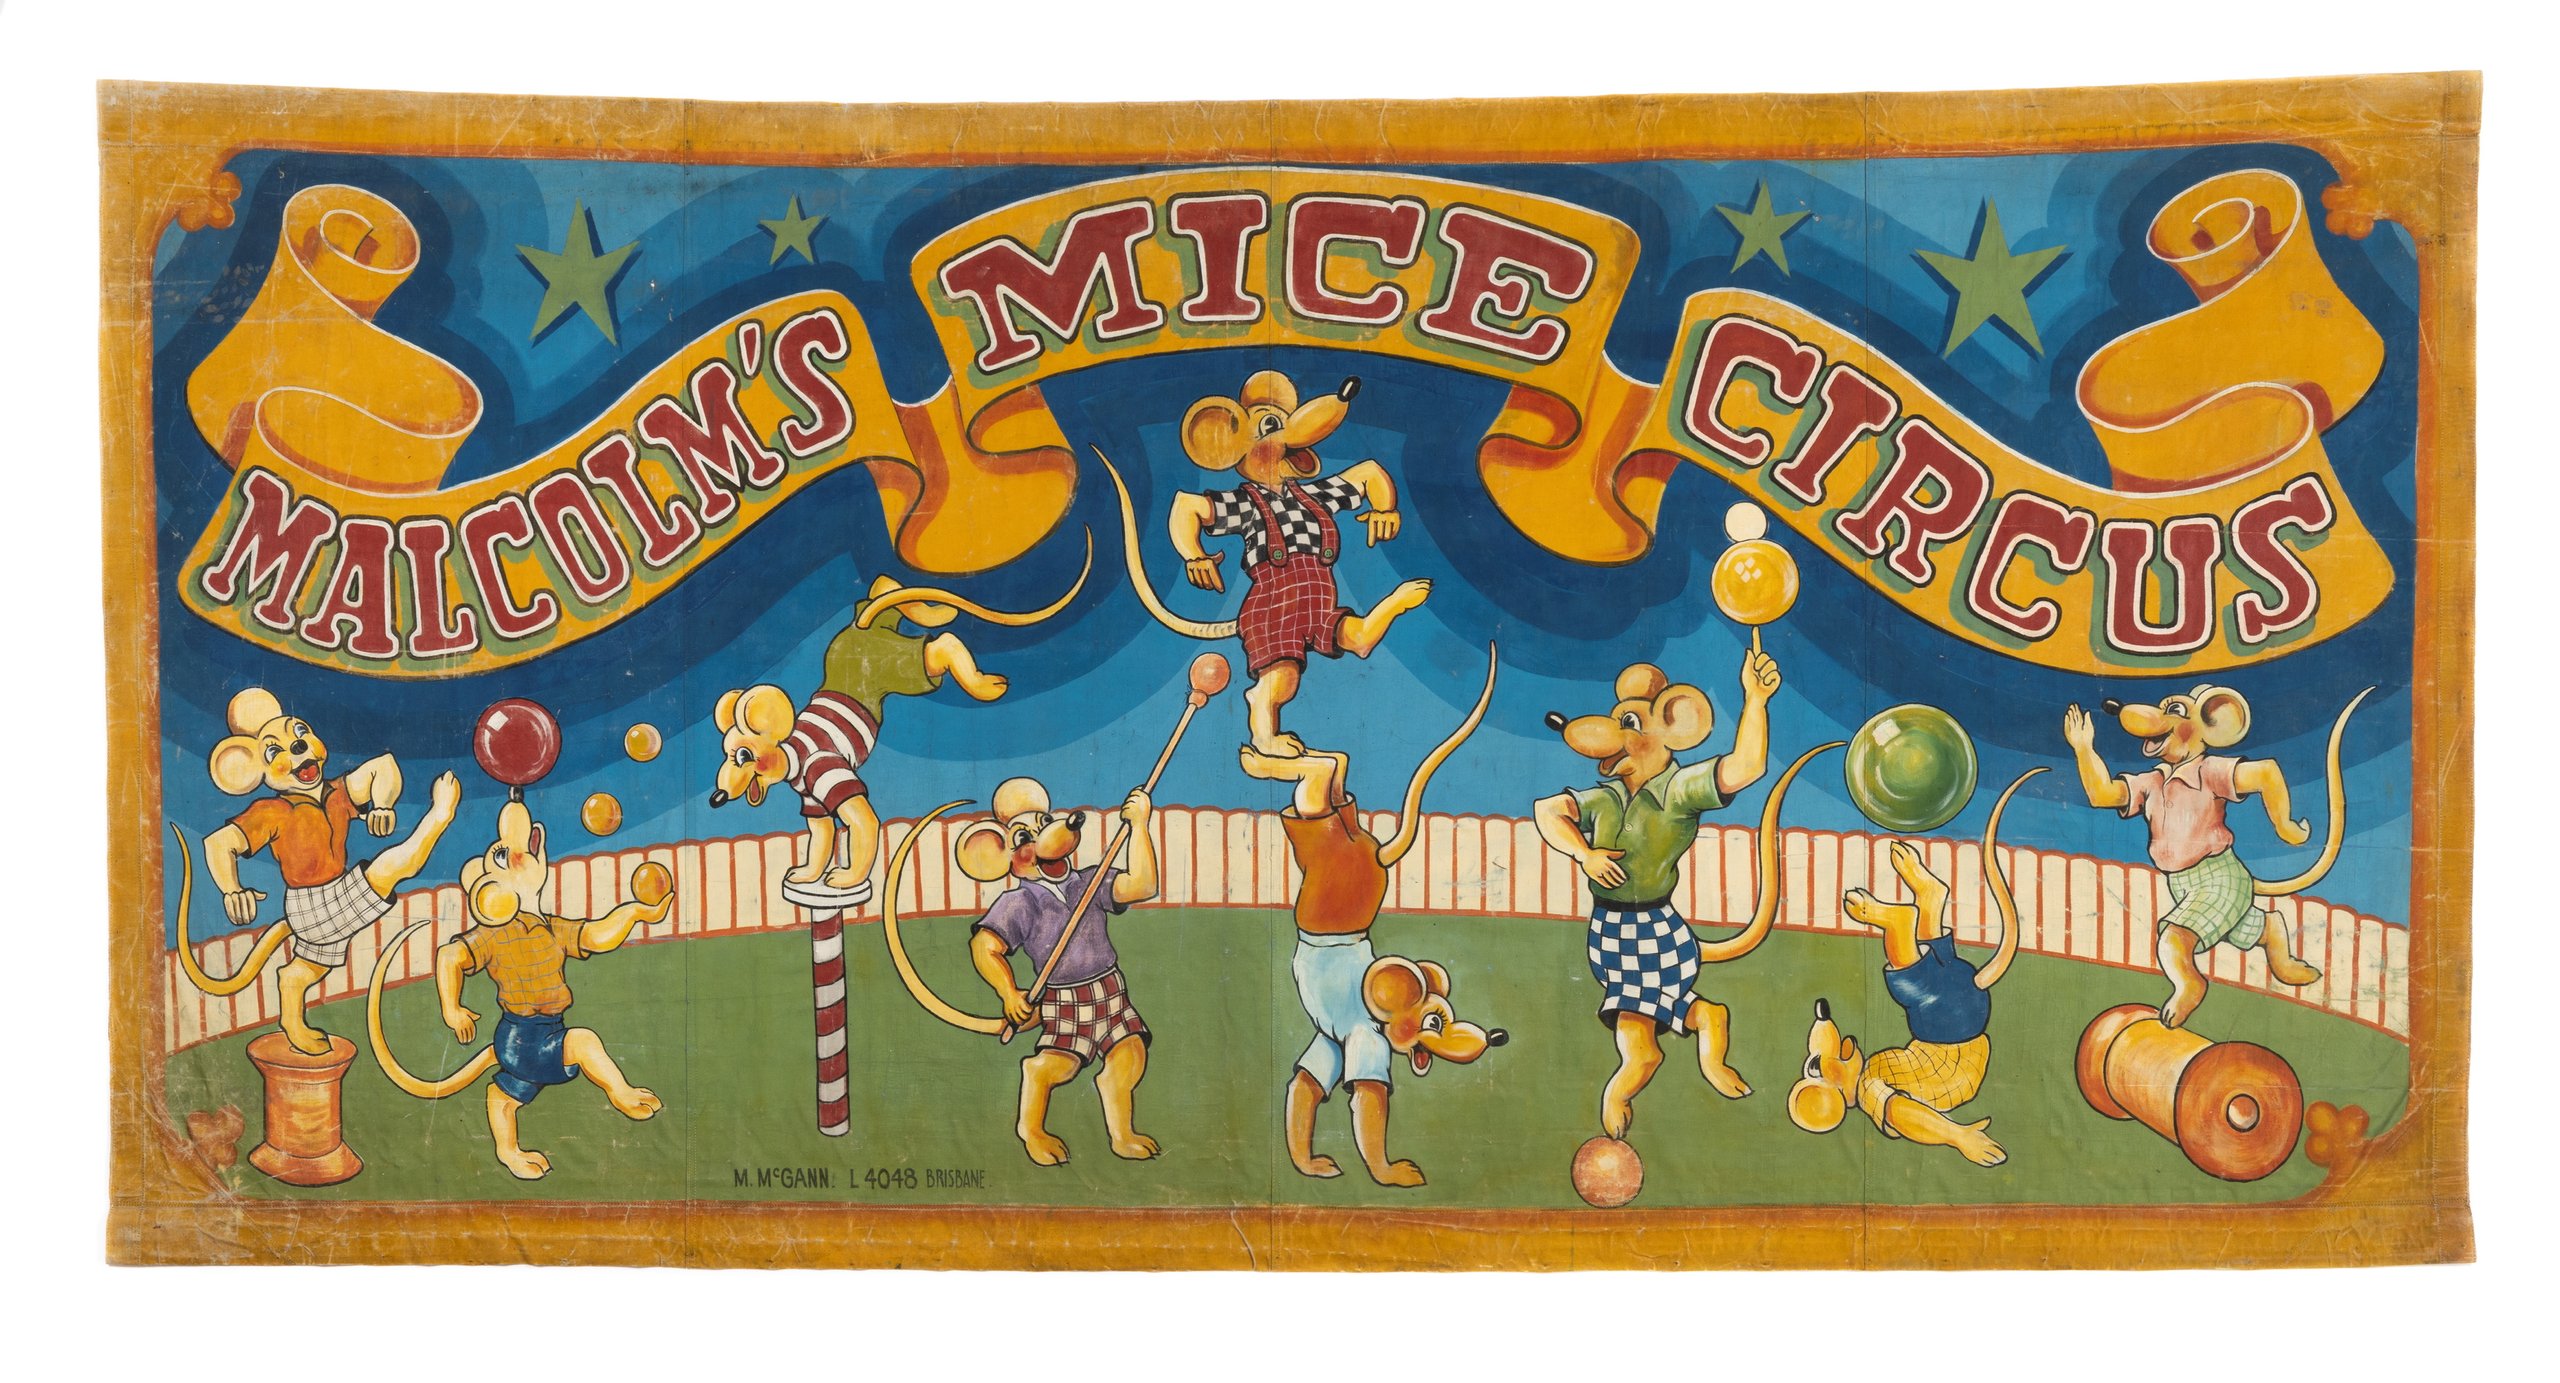 'Malcolm's Mice Circus' sideshow banner